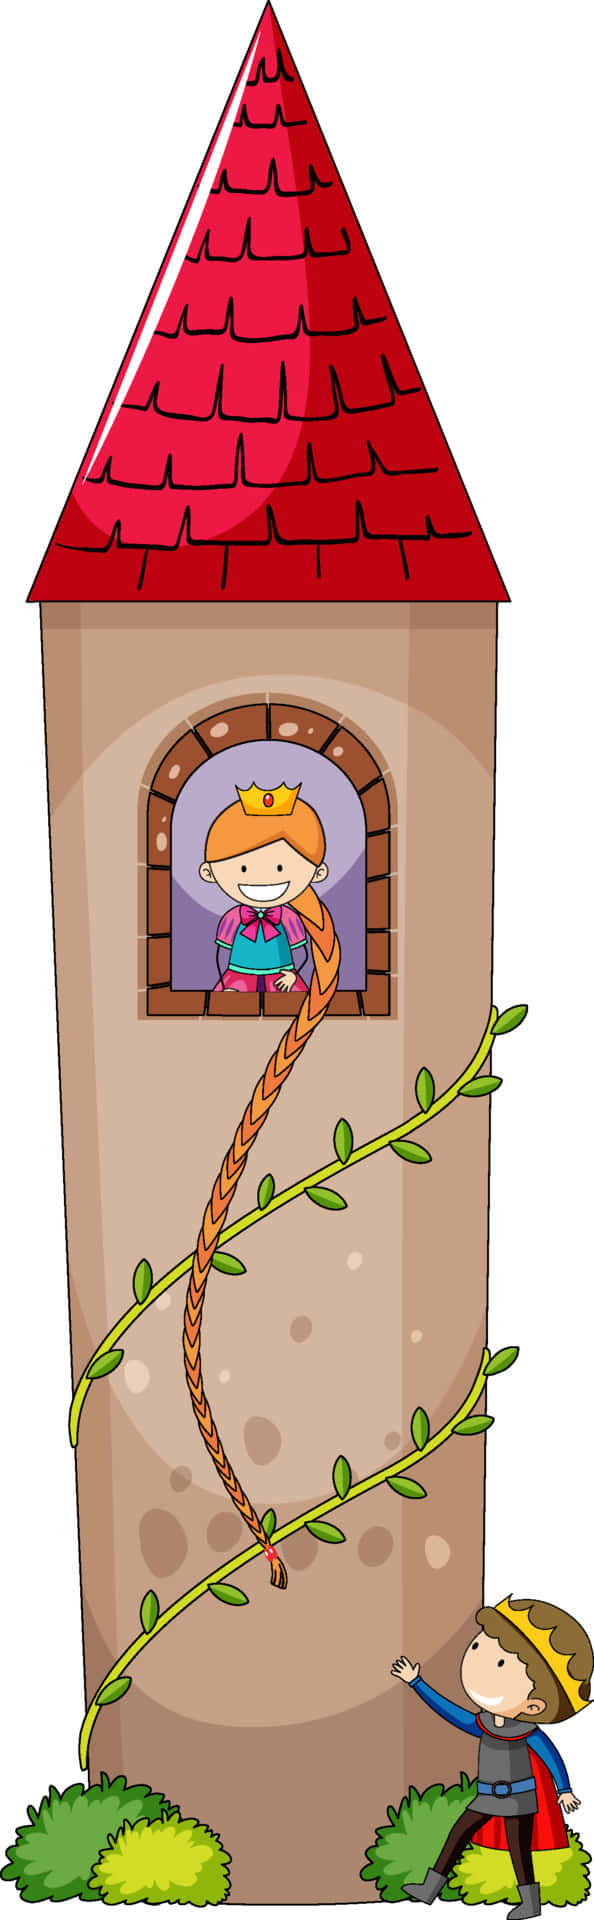 Enchanting Portrait Of Rapunzel With Her Golden Locks